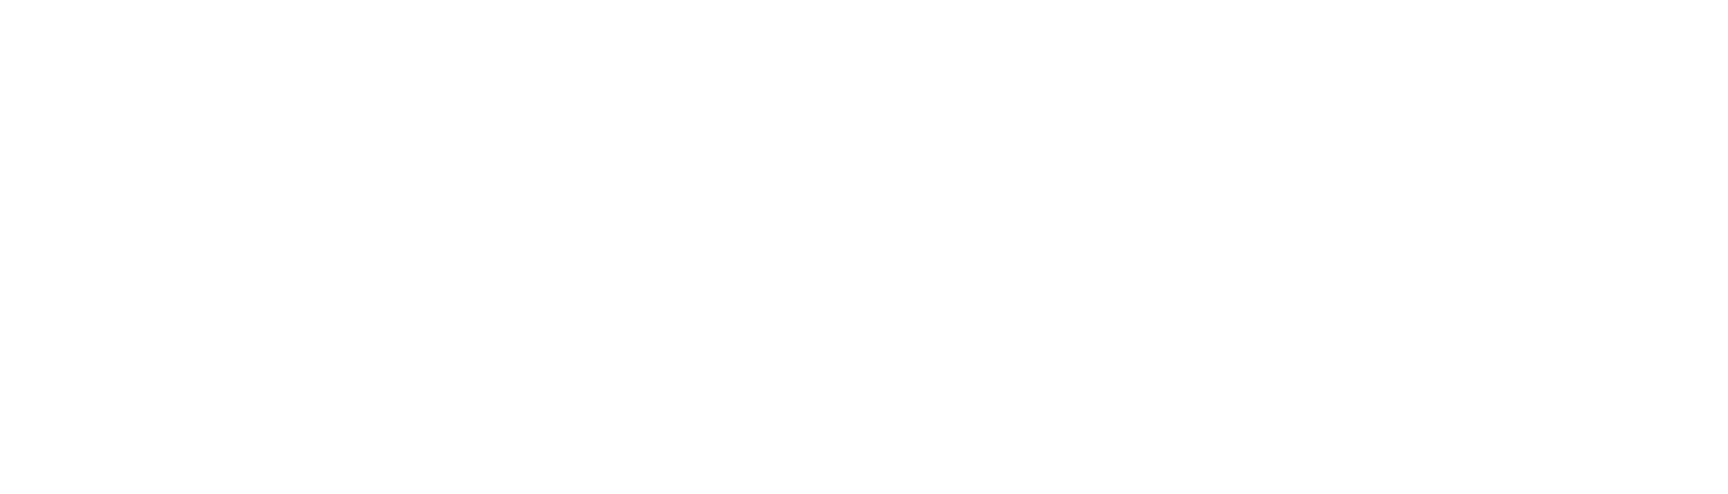 Merrill A Bank of America company logo